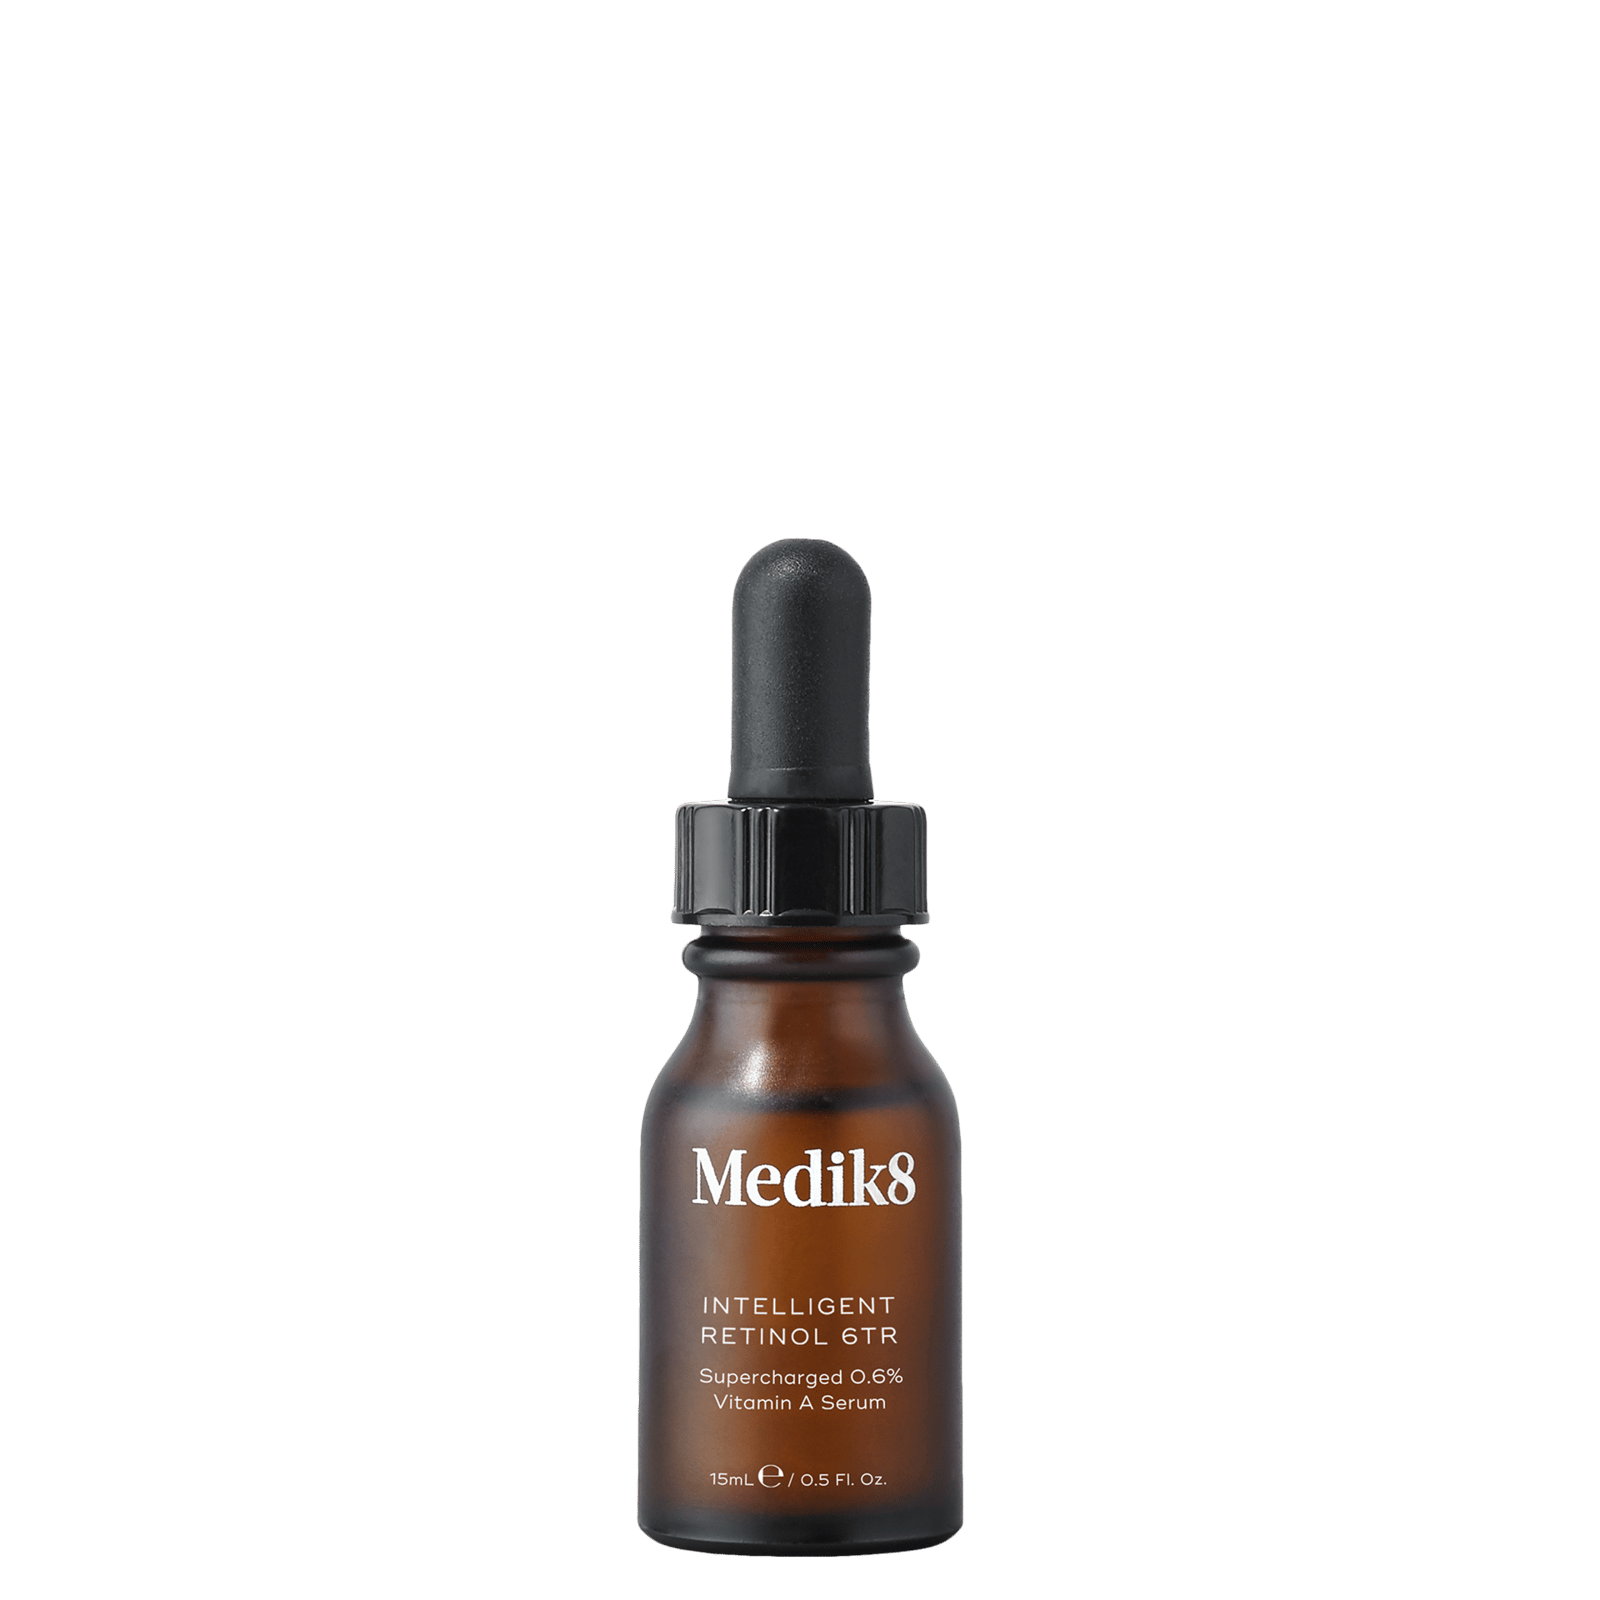 Medik8 Intelligent Retinol 6TR Serum 15 ml